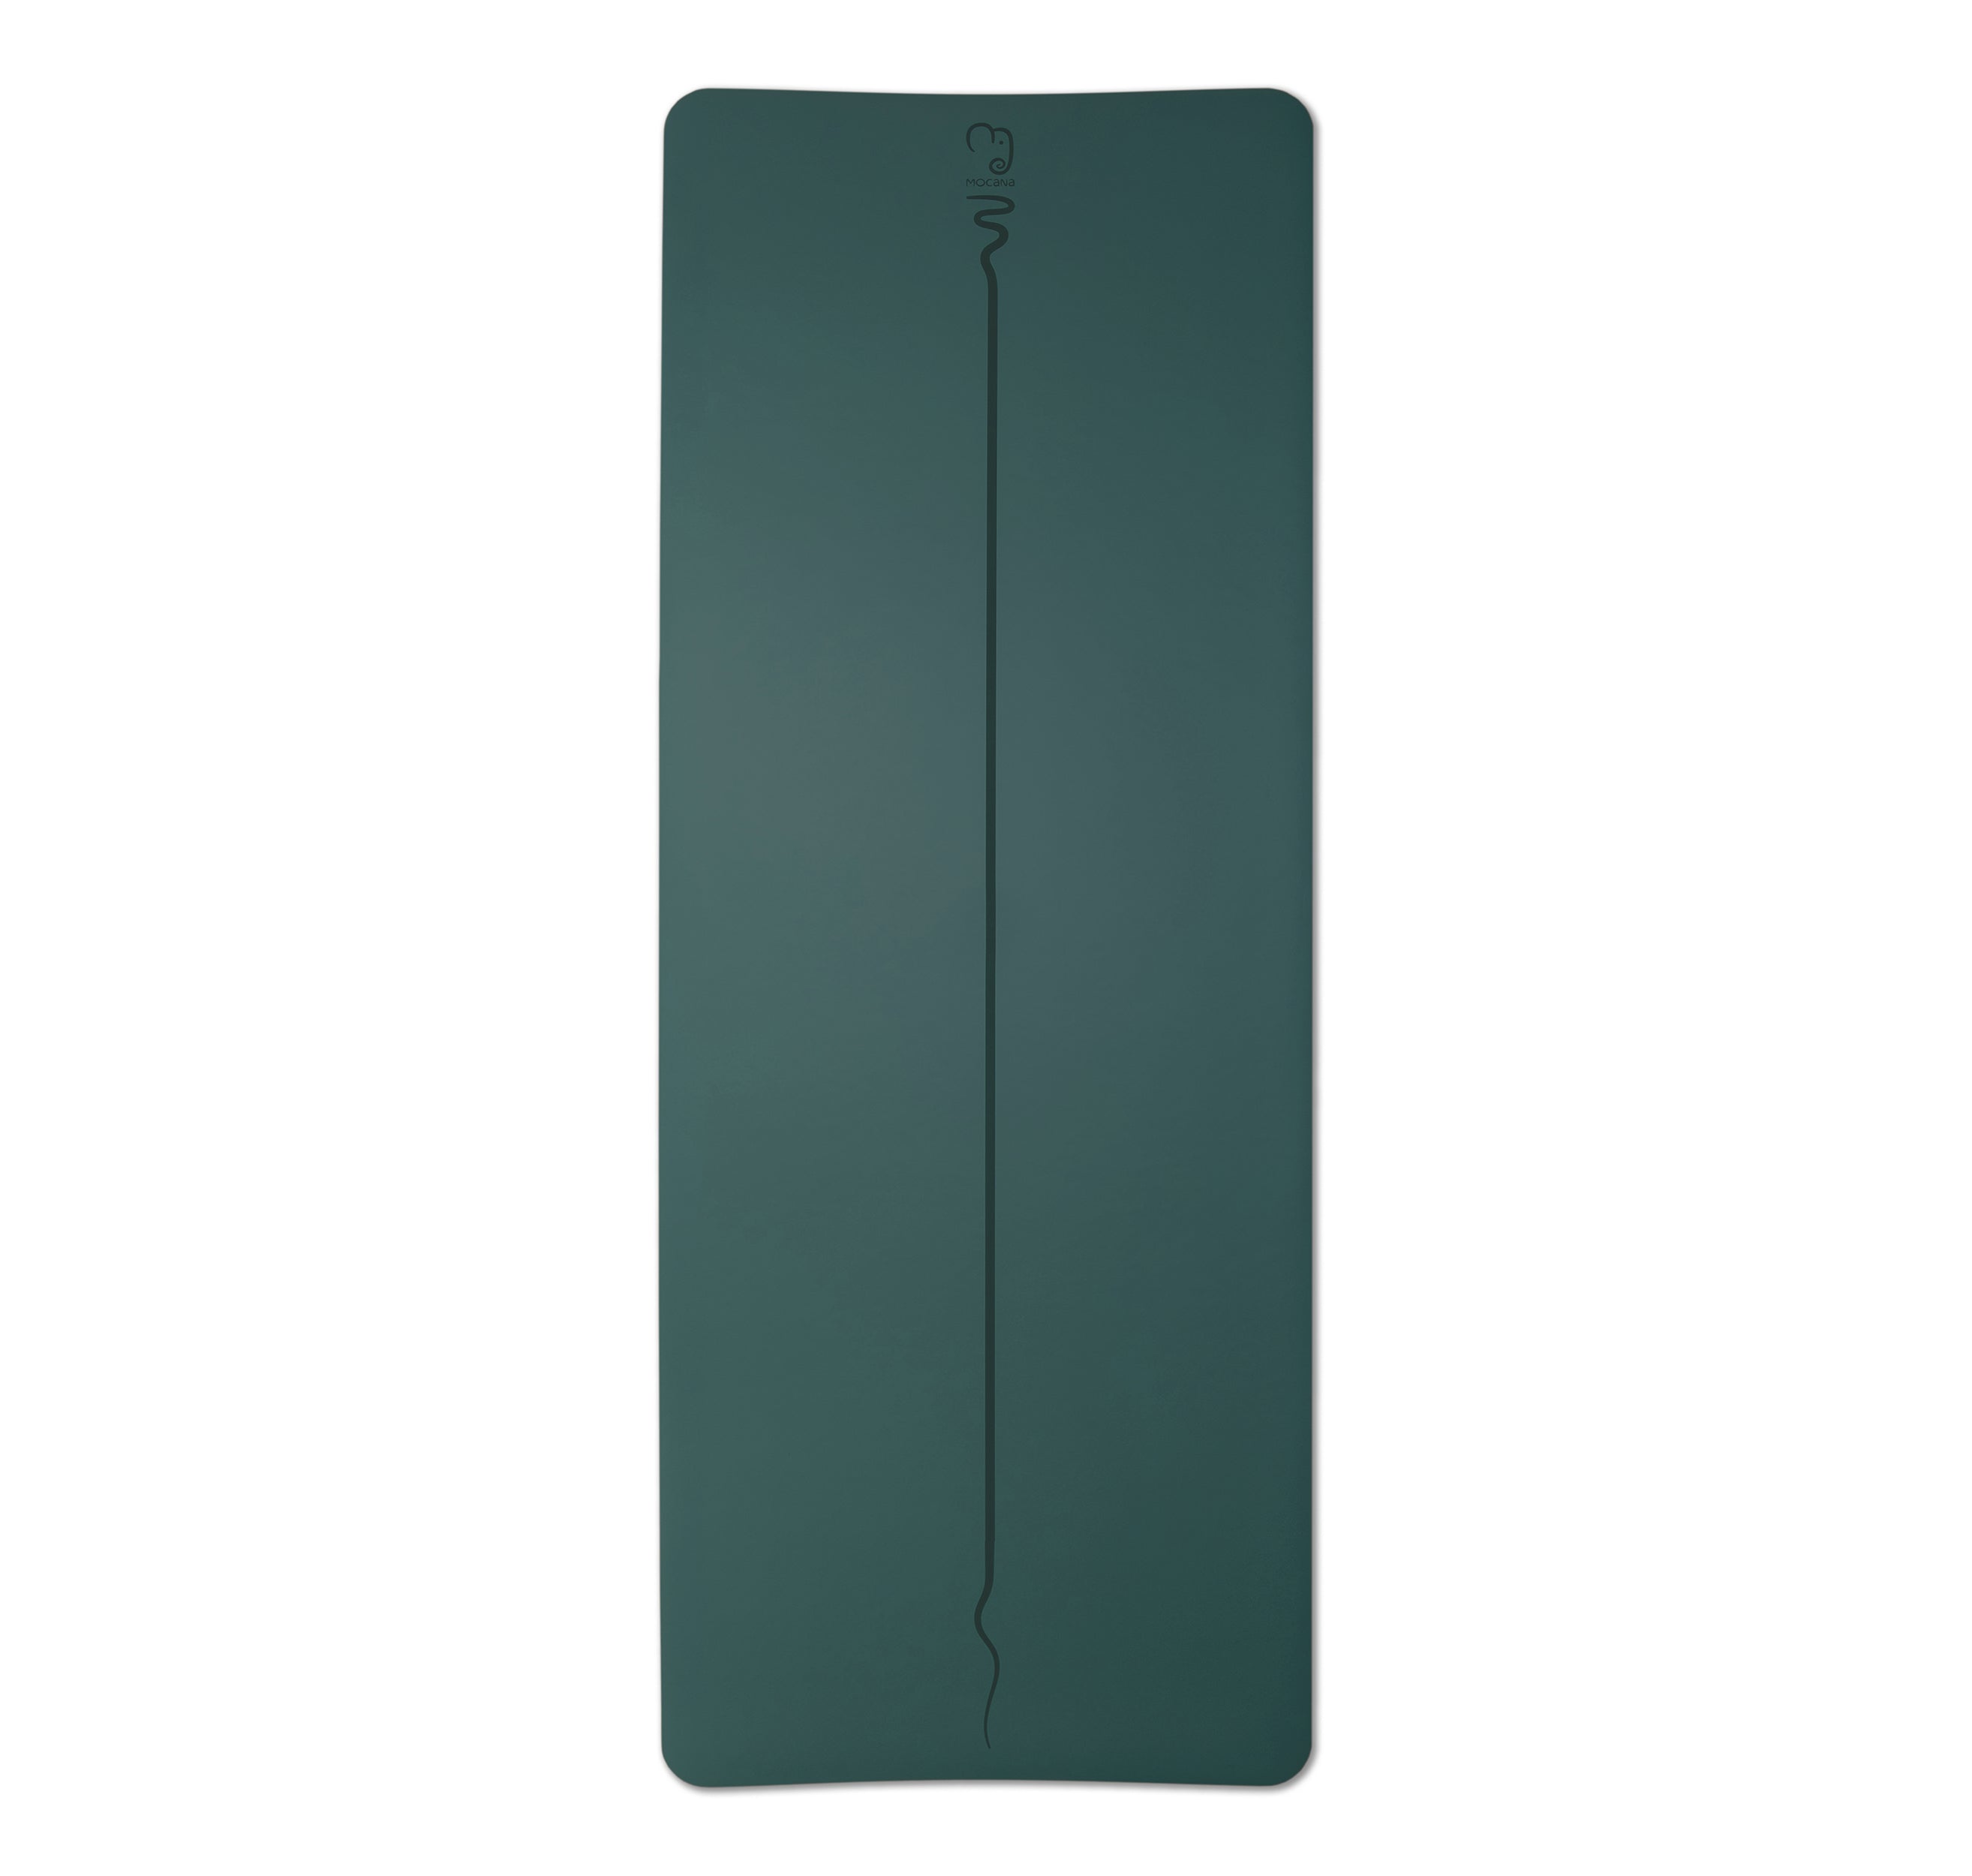 Lumen Forest | SoftGrip Yoga Mat